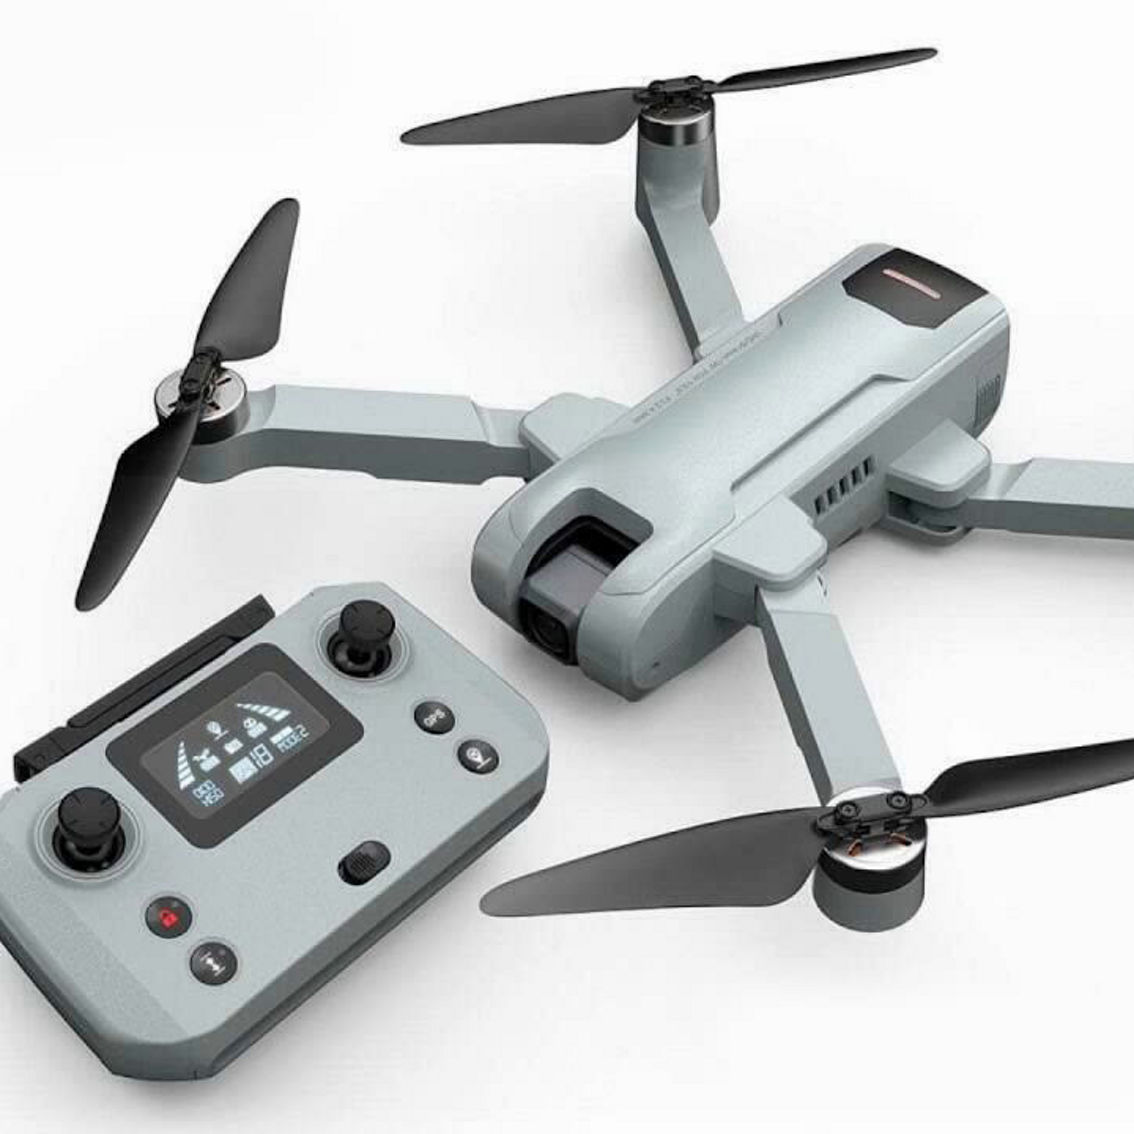 CIS-V6 medium size GPS foldable drone with 2.7k camera - Image 2 of 5